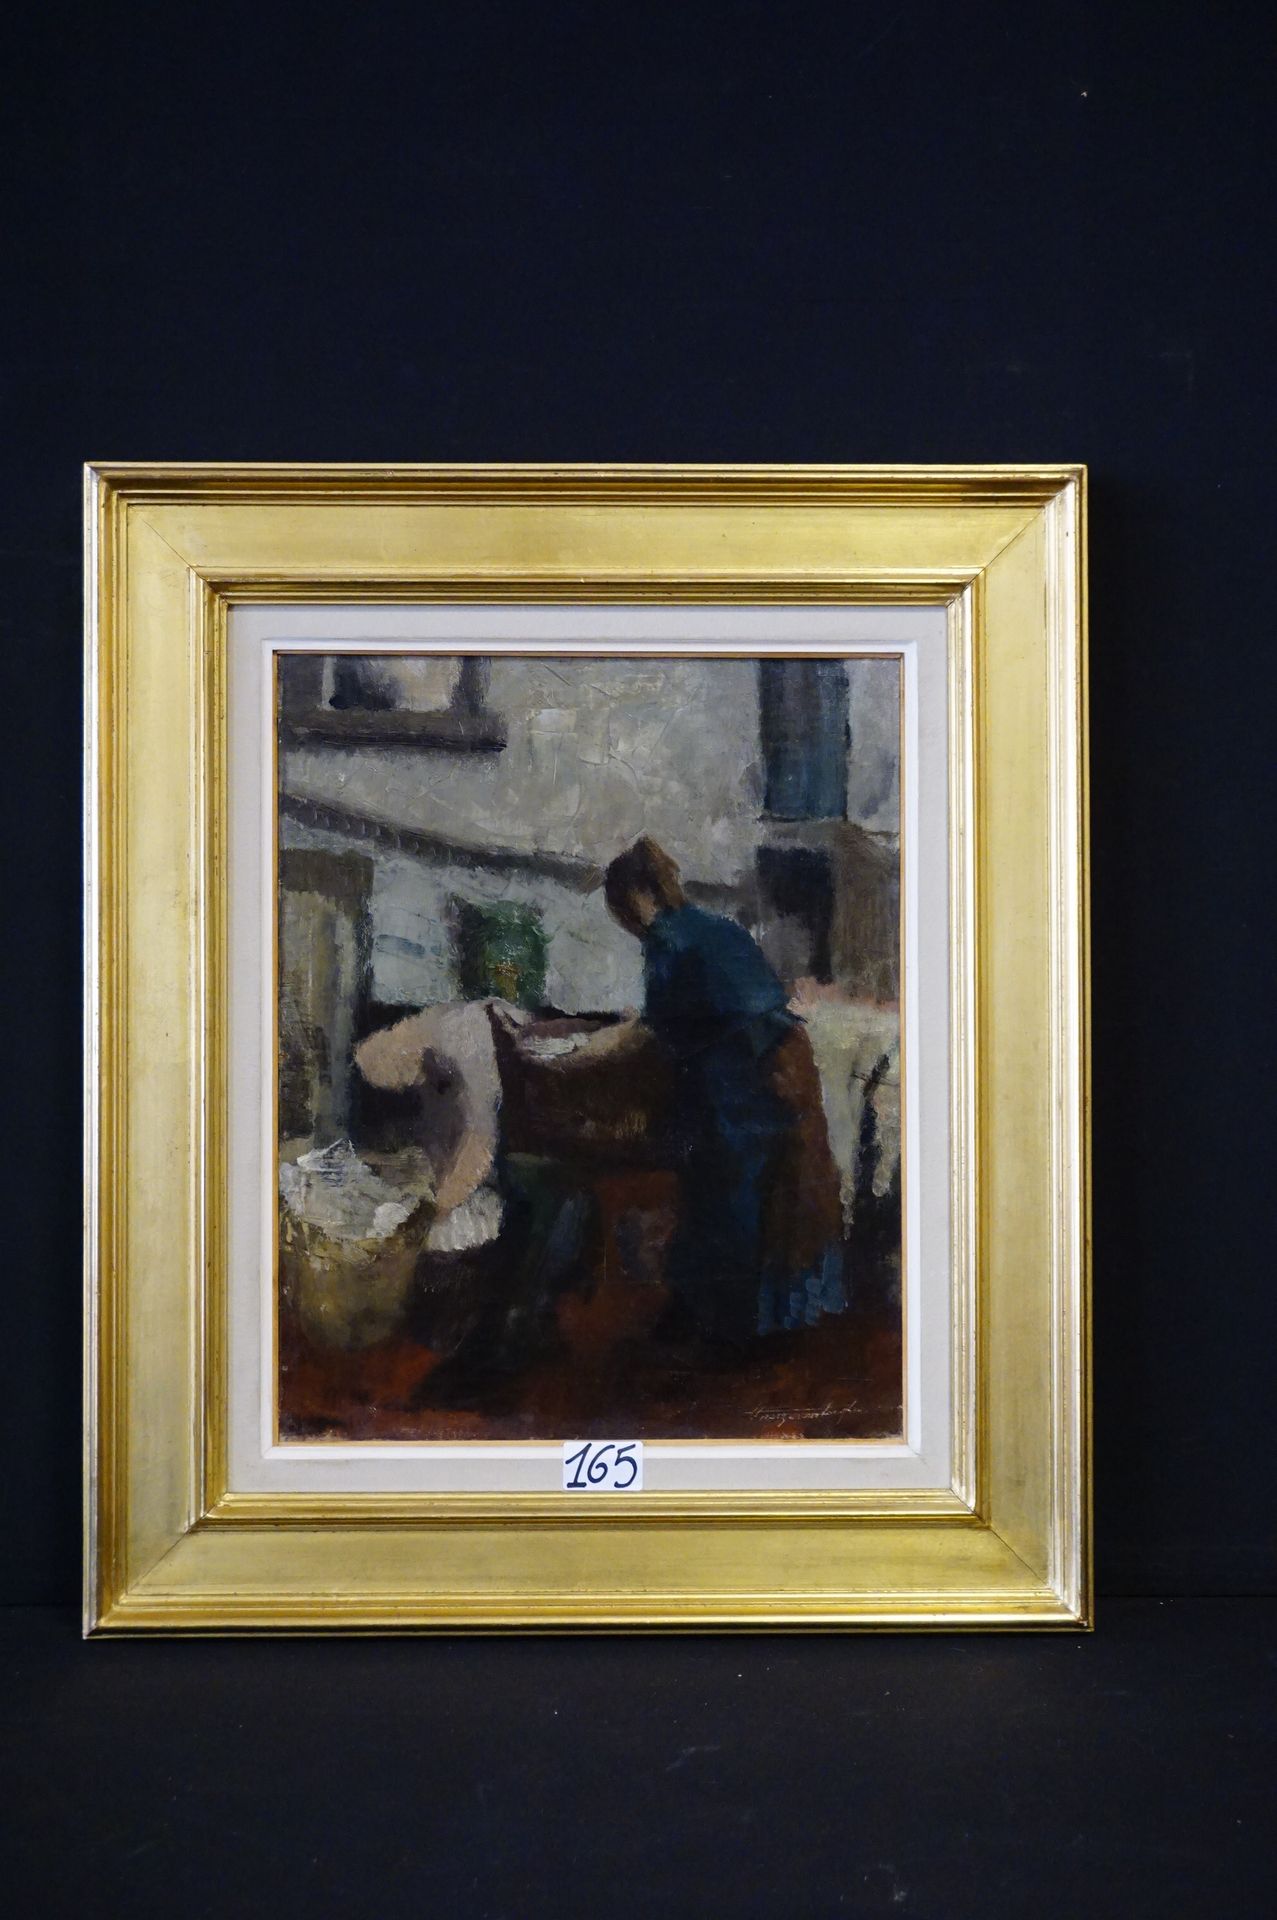 GEORGES VAN ZEVENBERGHEN (1877 - 1968) "室内有女人" - 布面油画 - 已签名 - 40 x 32 cm